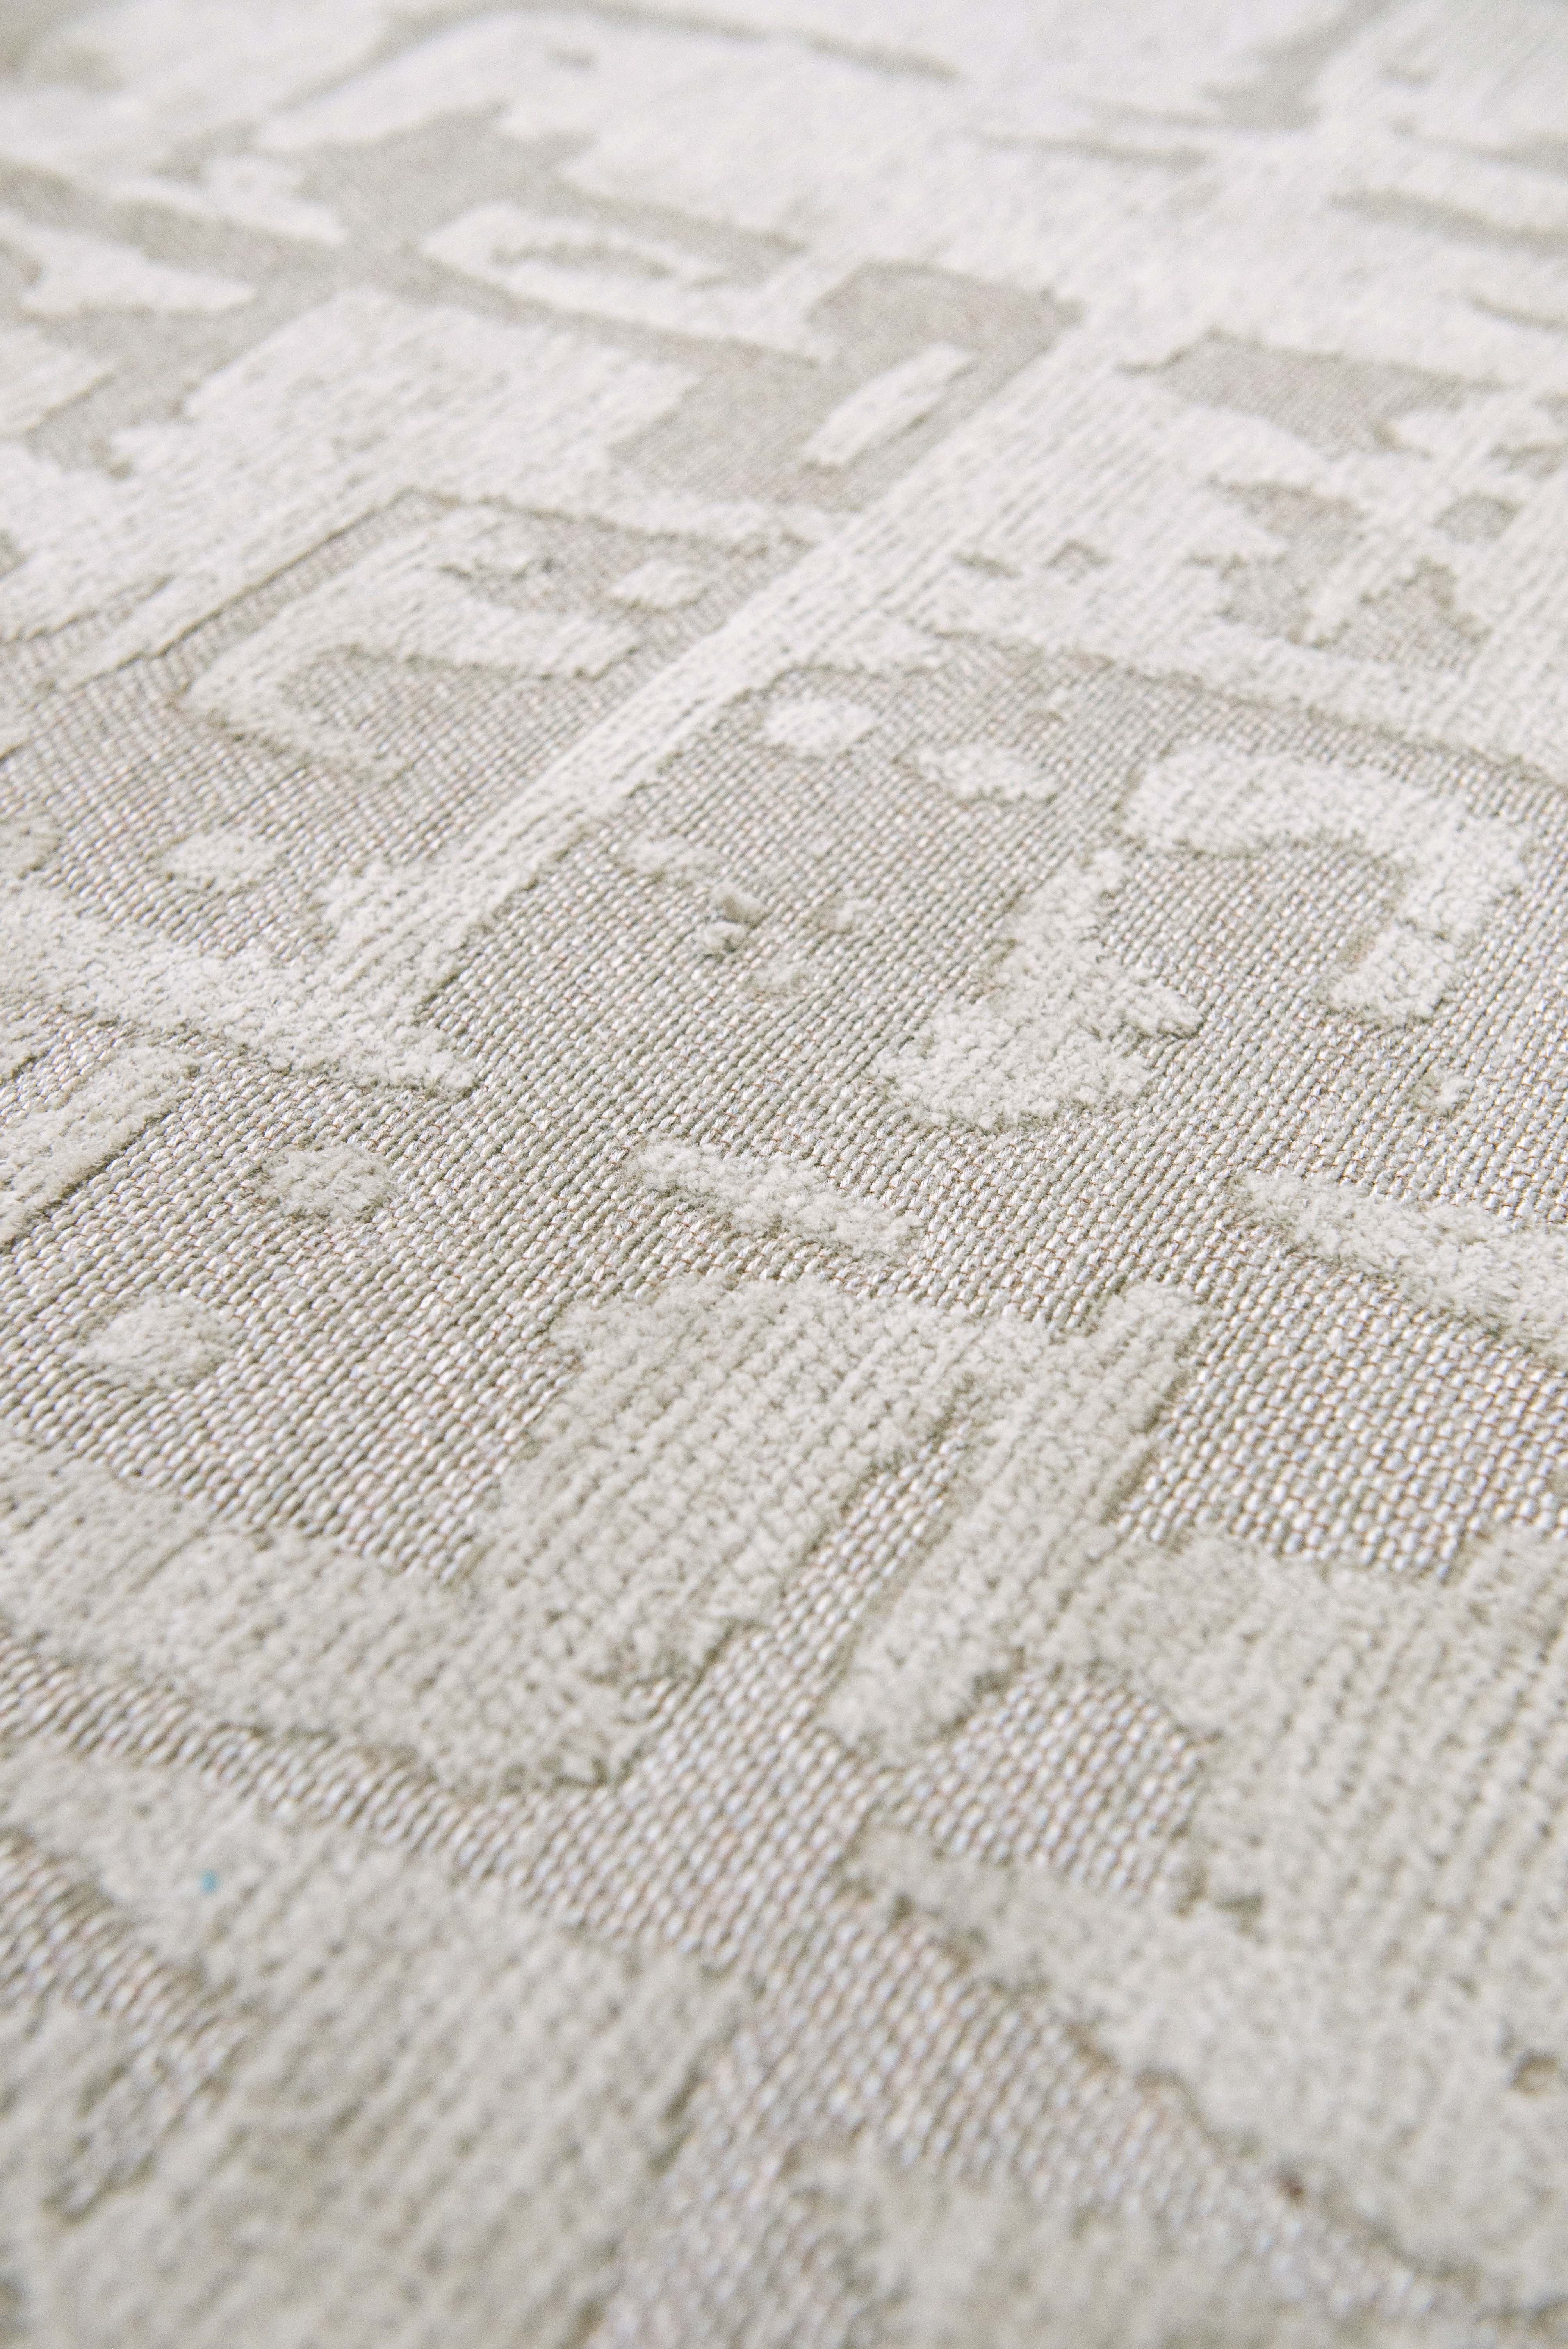 Beige flatweave runner rug with subtle, organic pattern